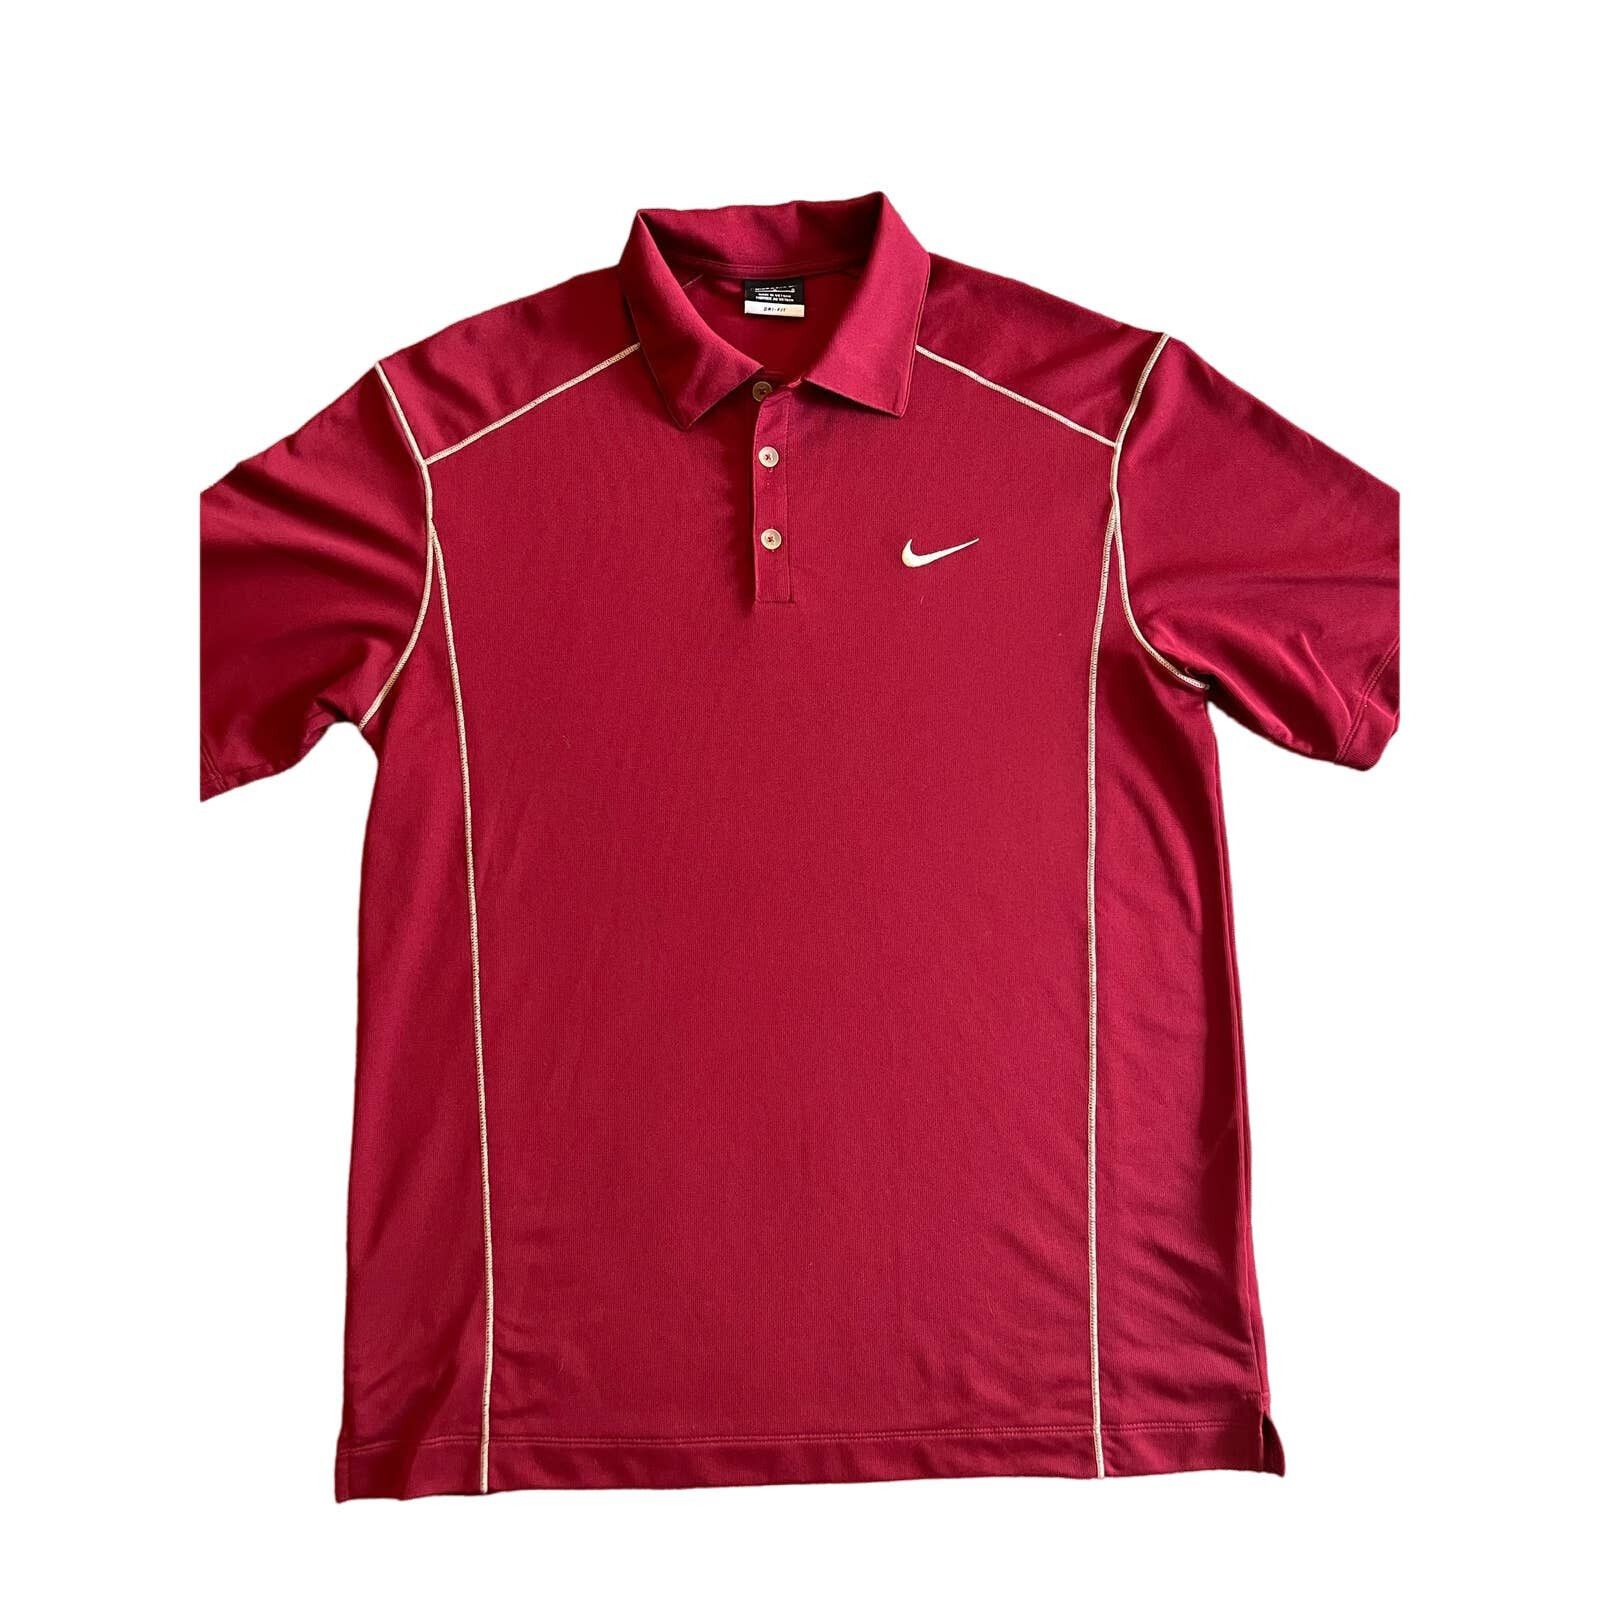 Nike Nike Golf Large maroon polo no logo Size US L / EU 52-54 / 3 - 1 Preview